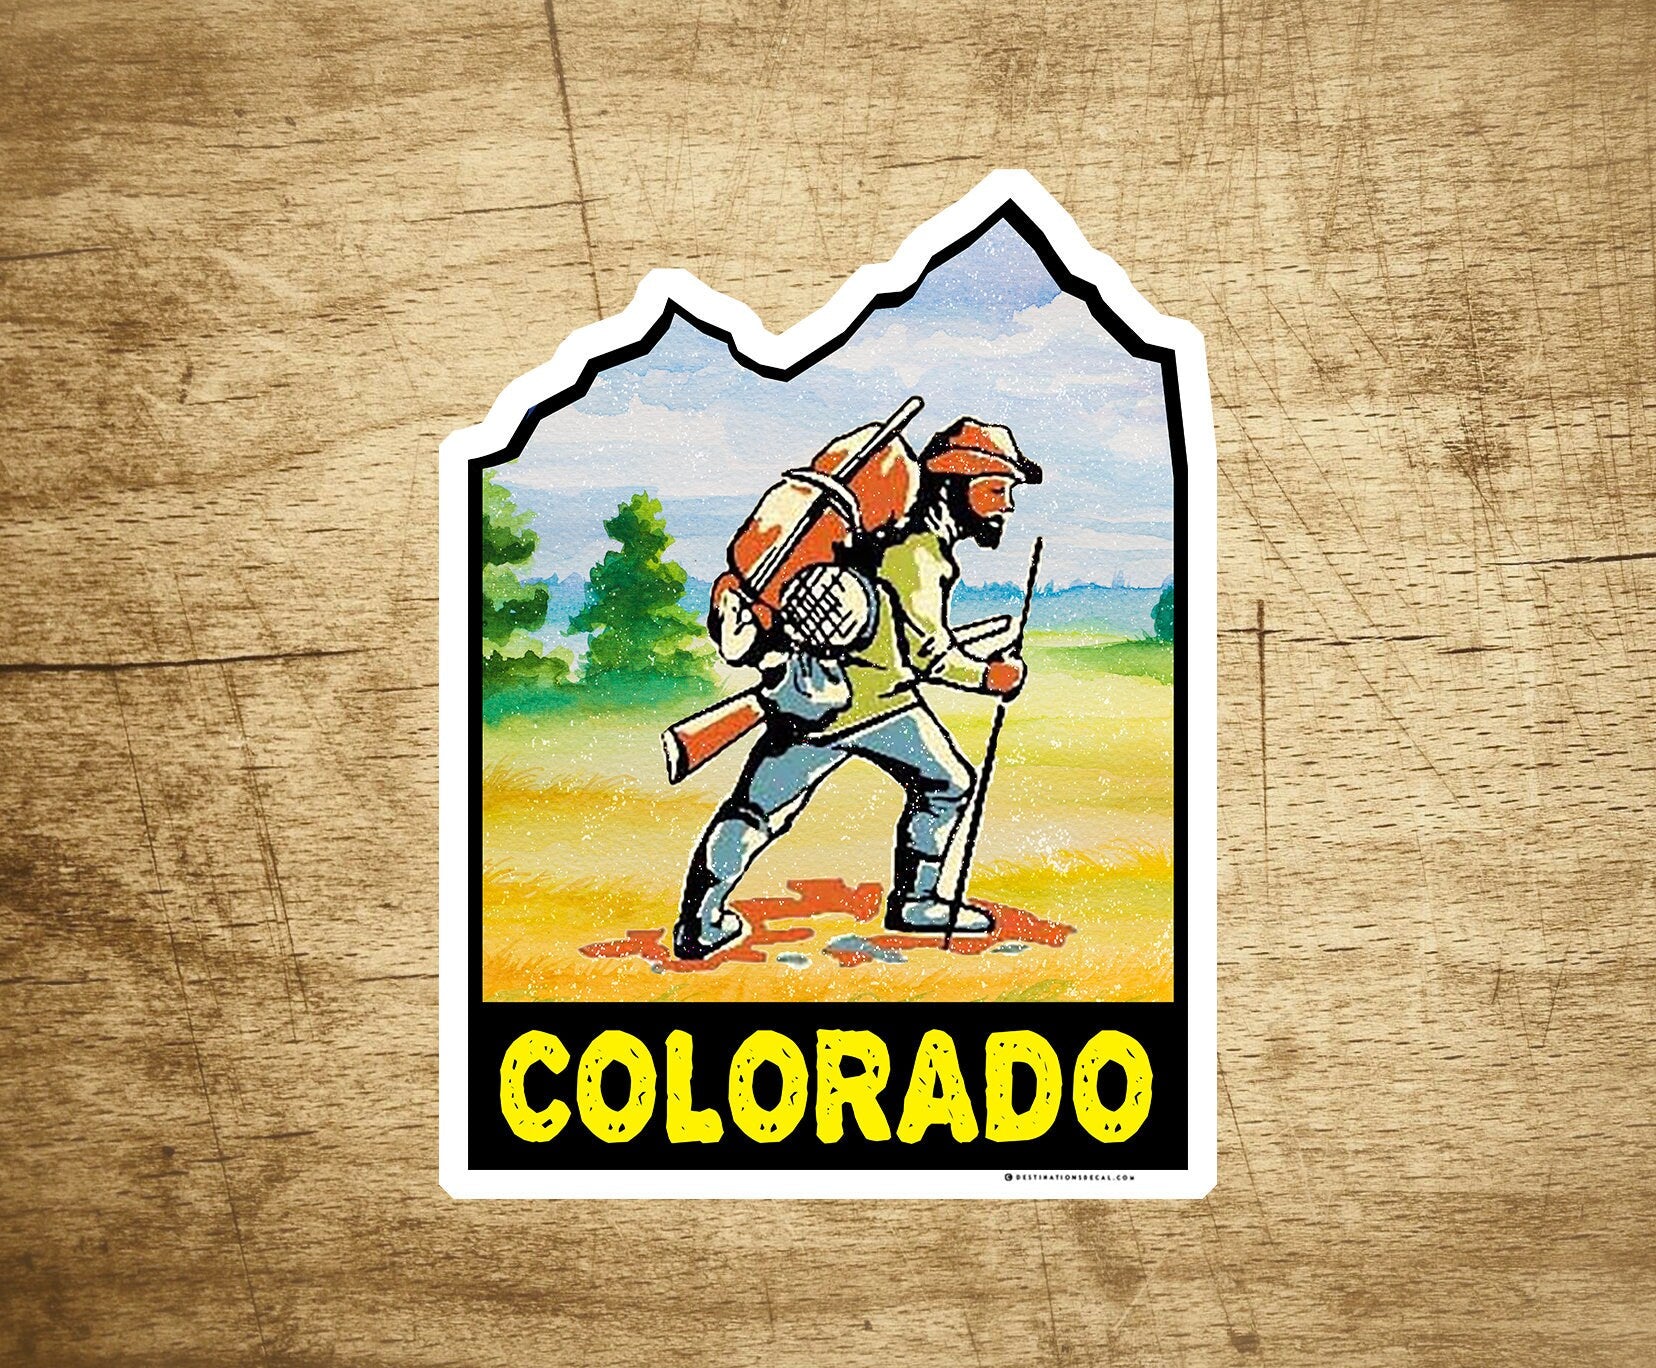 Colorado Hiking Sticker Decal 3.75" x 2.75" Hiker Vintage Travel Decals Stickers